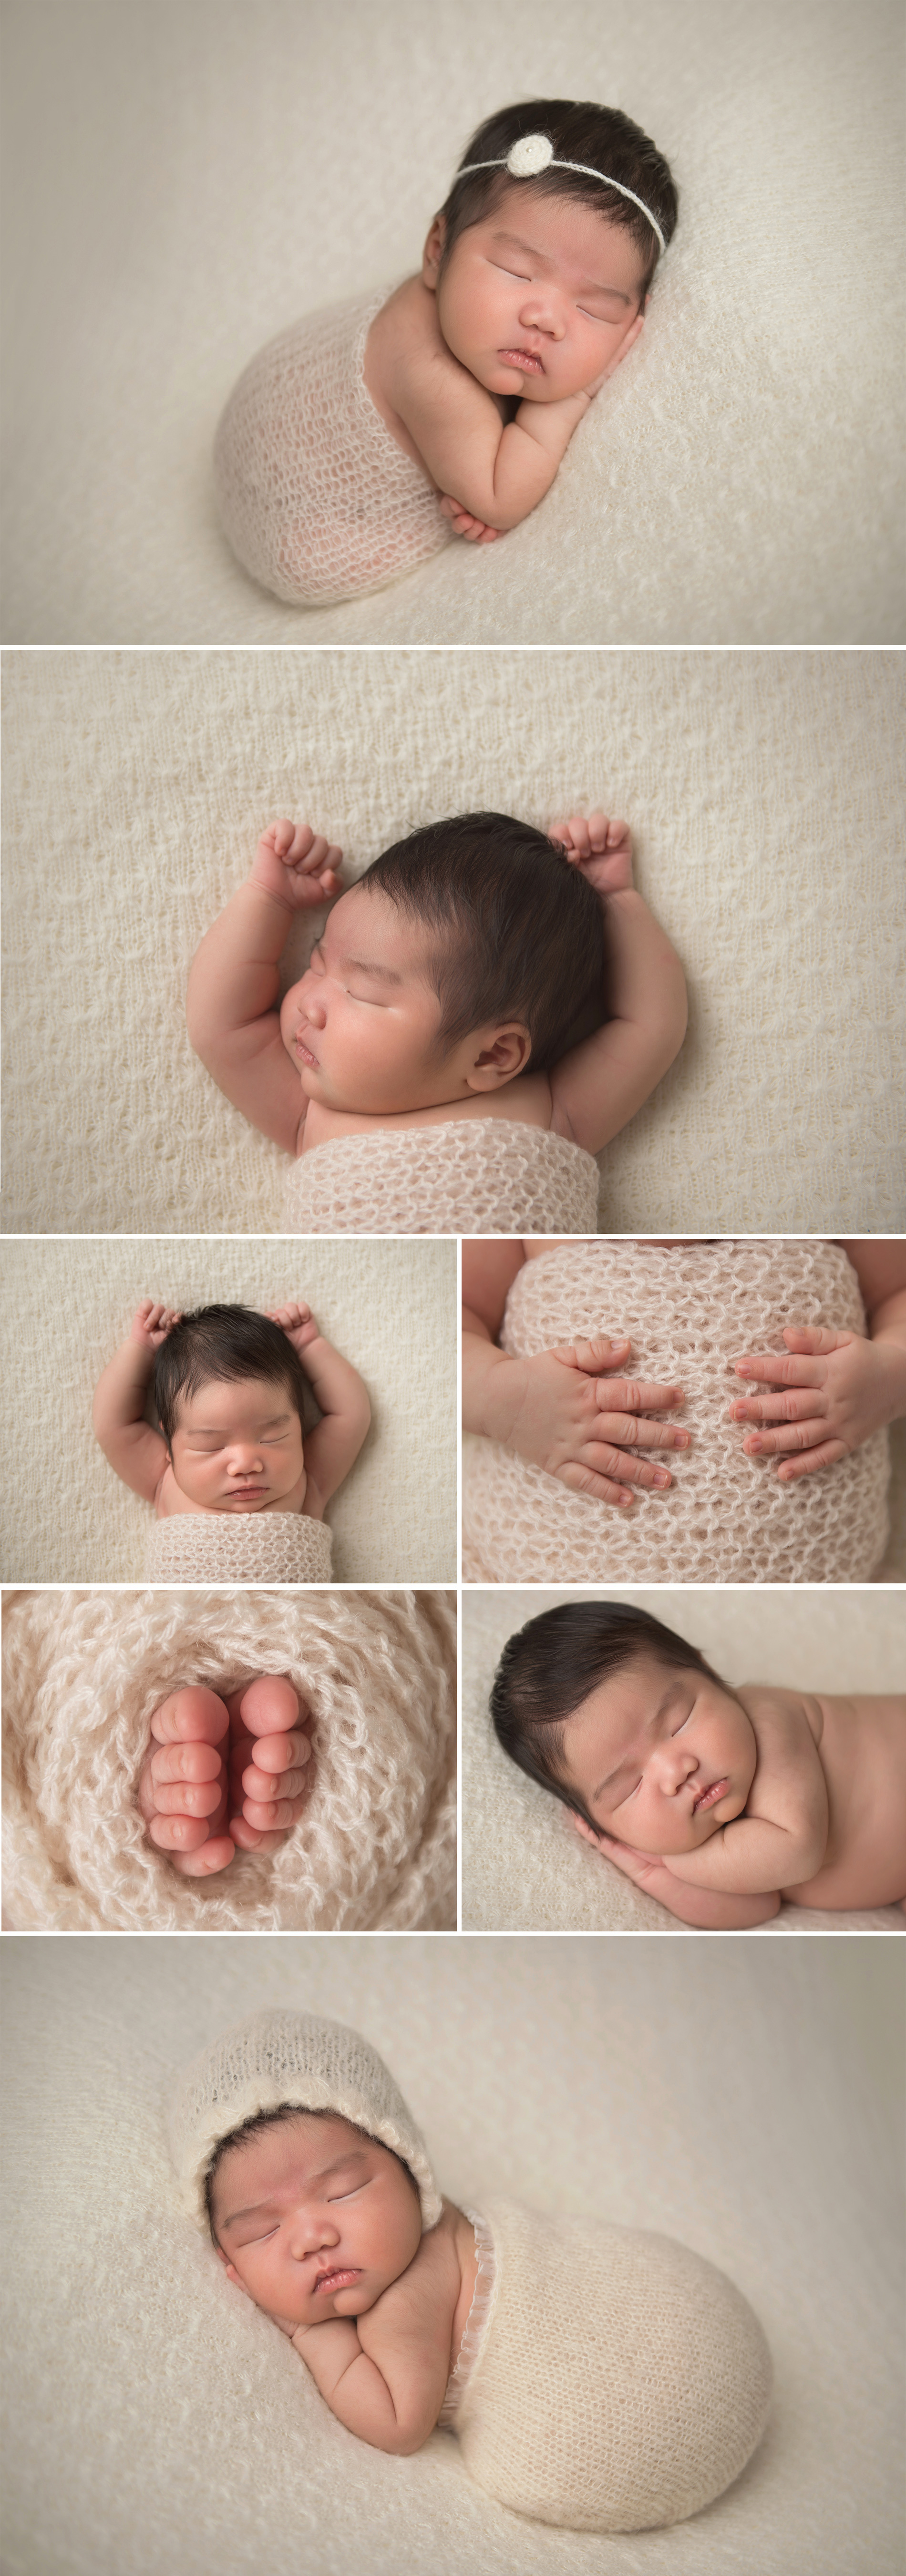 nyc premier newborn photographer studio